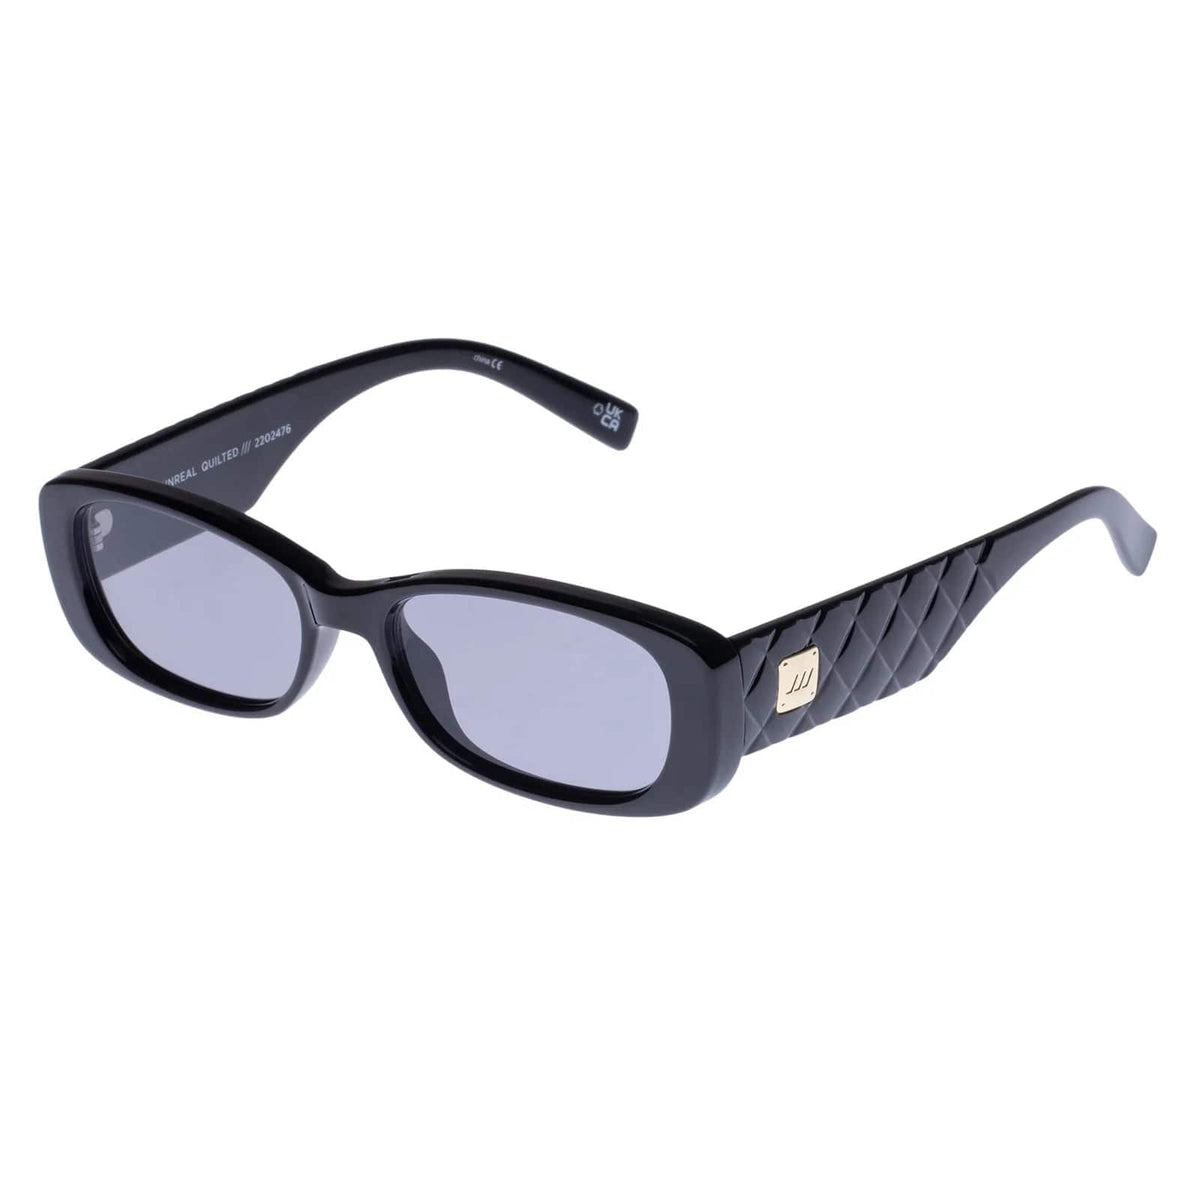 Unreal Quilted Edt Sunnies - Le Specs - Splash Swimwear  - April30, le specs, new accessories, sunnies - Splash Swimwear 